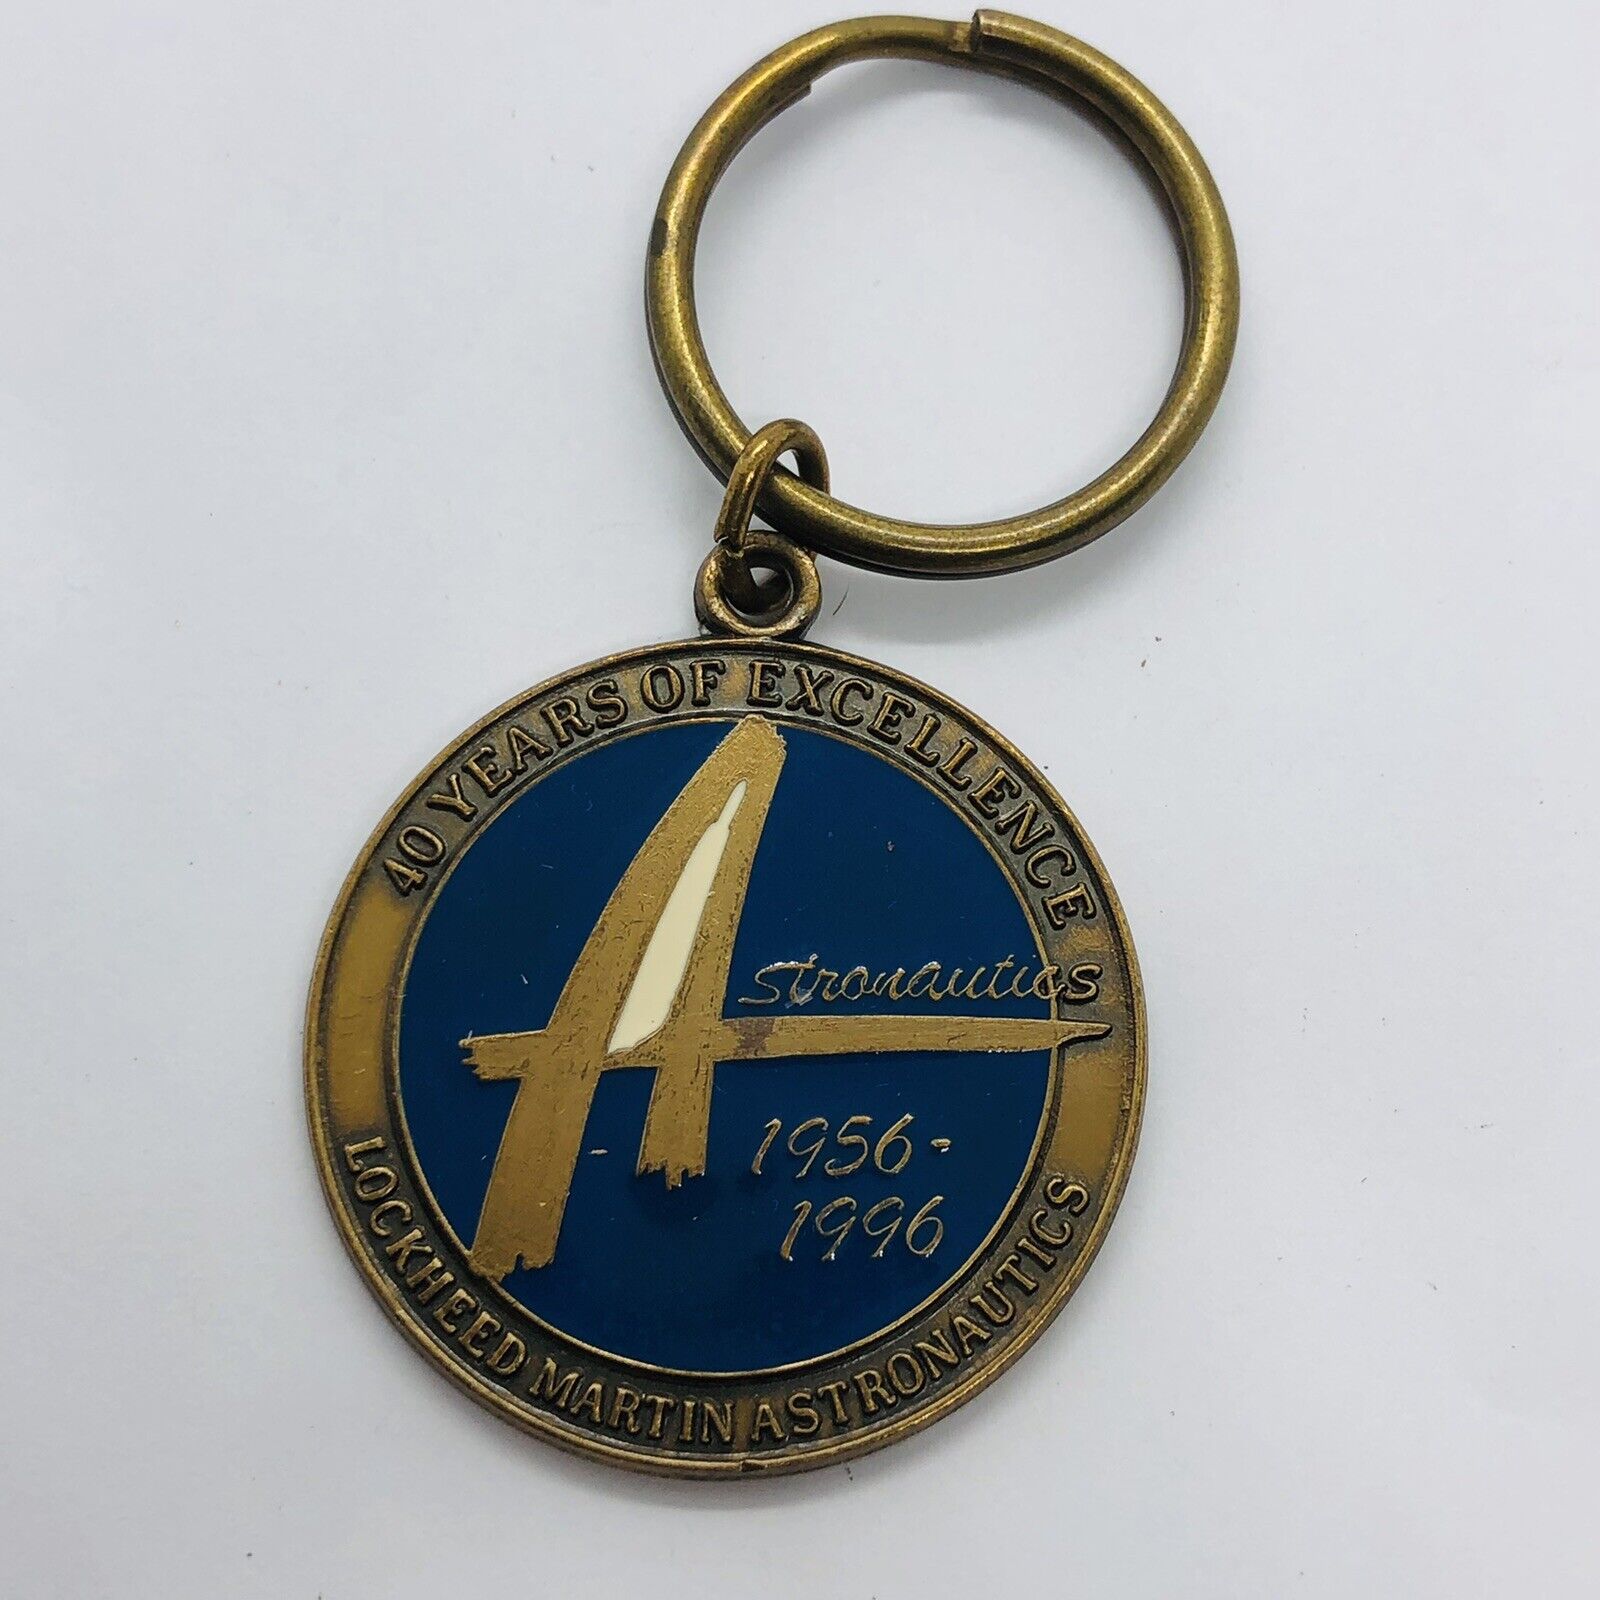 1996 Lockheed Martin Astronautics 40th Anniversary Brass Medallion Keychain